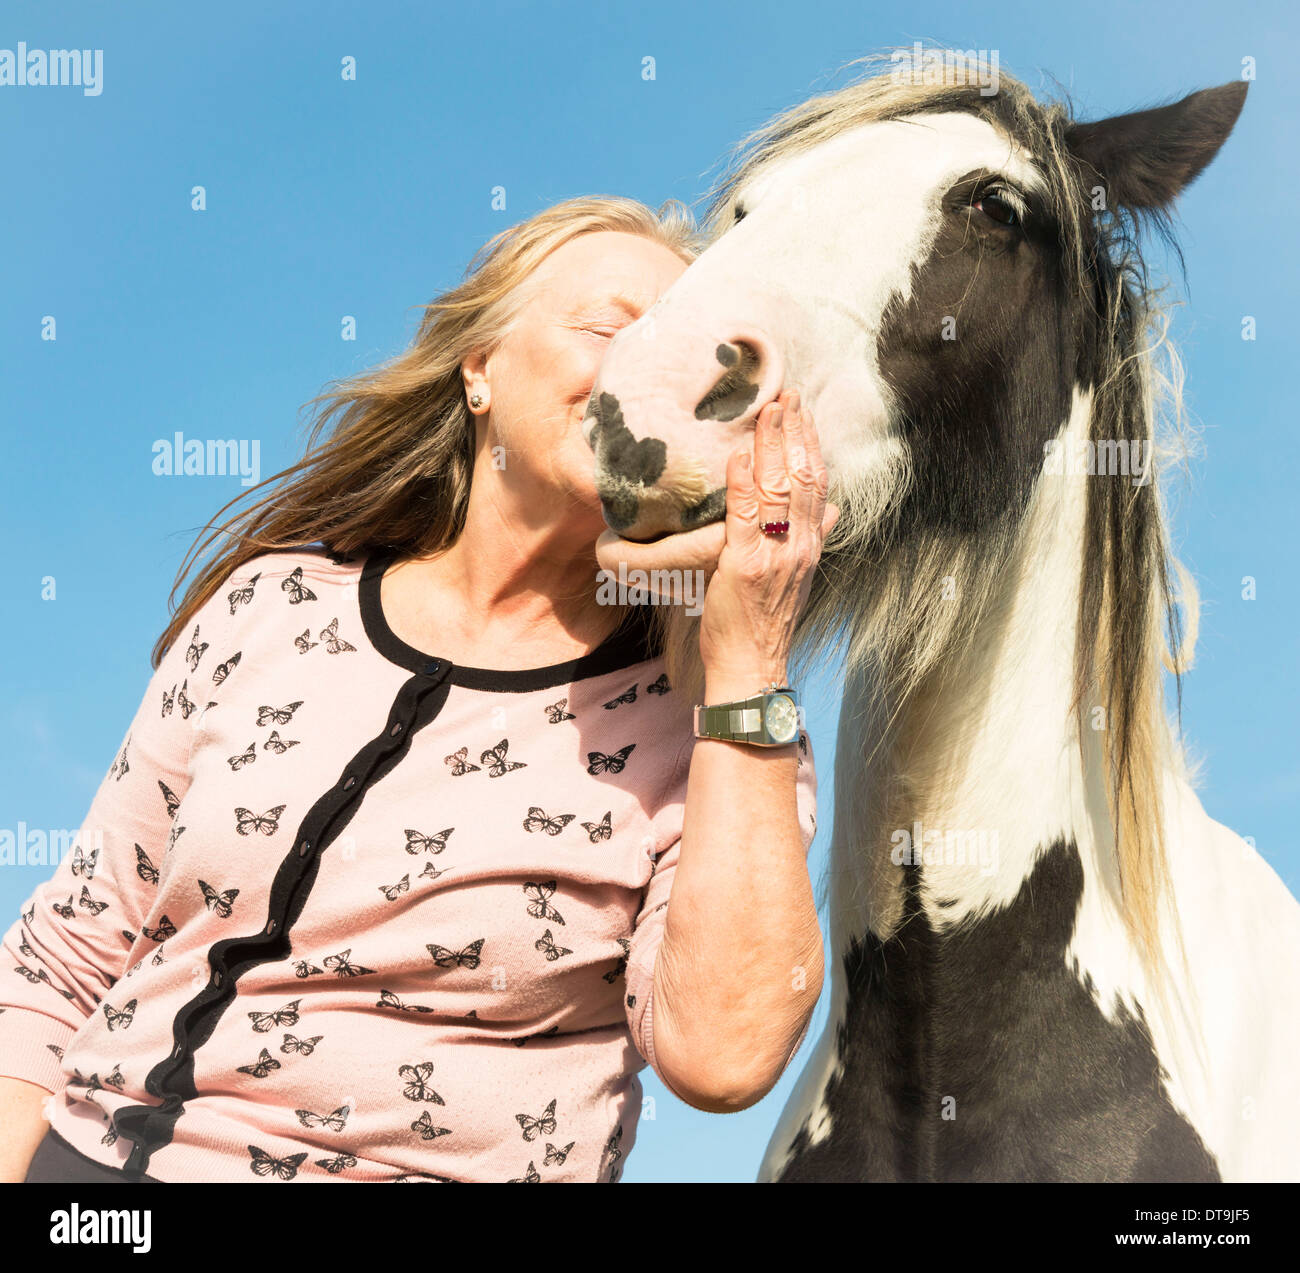 Mujer madura abrazando a caballo Foto de stock